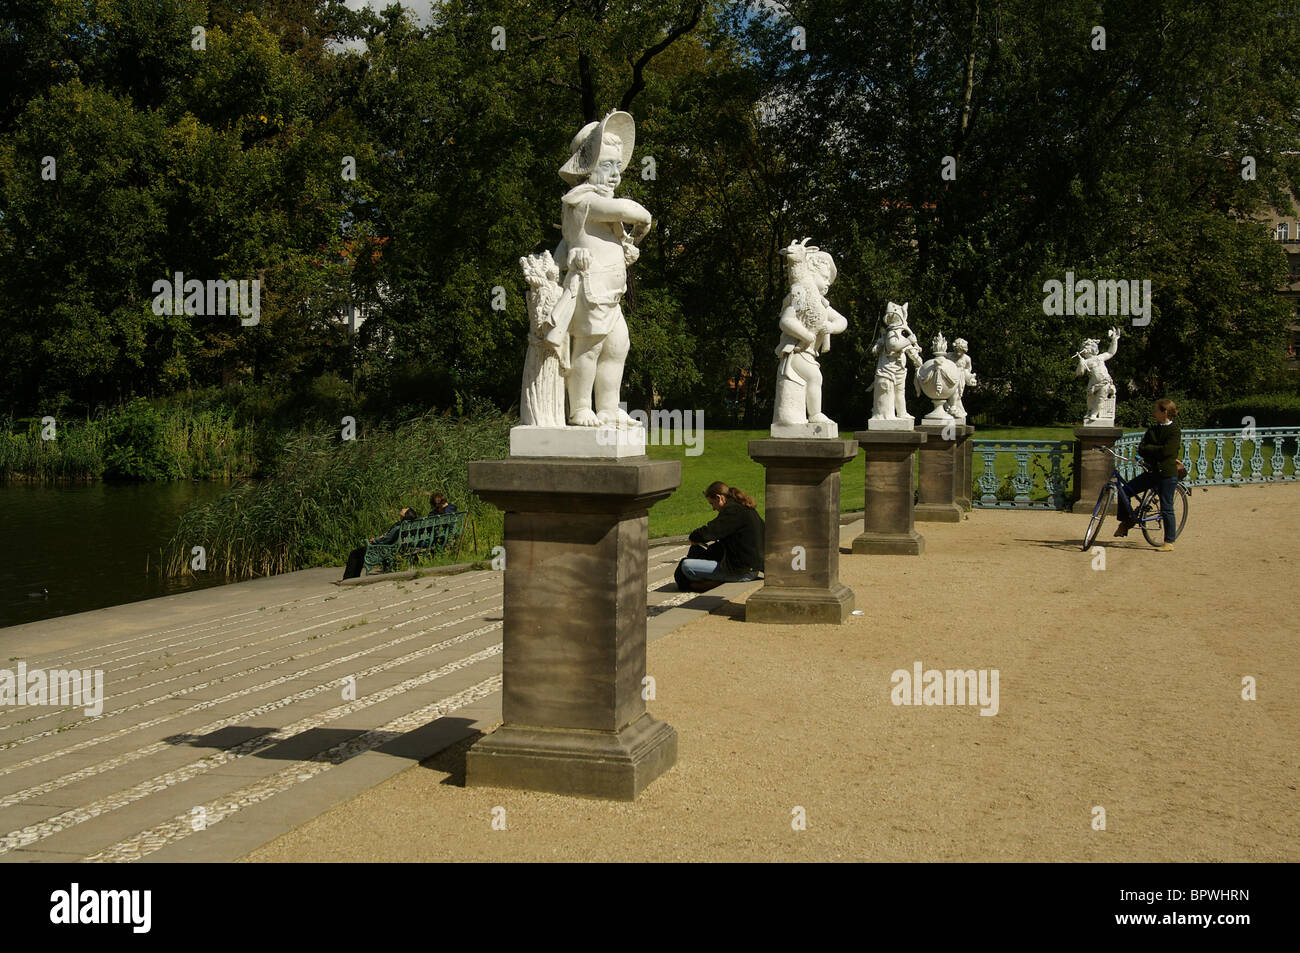 Schloss Charlottenburg Statues In The Park Gardens The Stock Photo